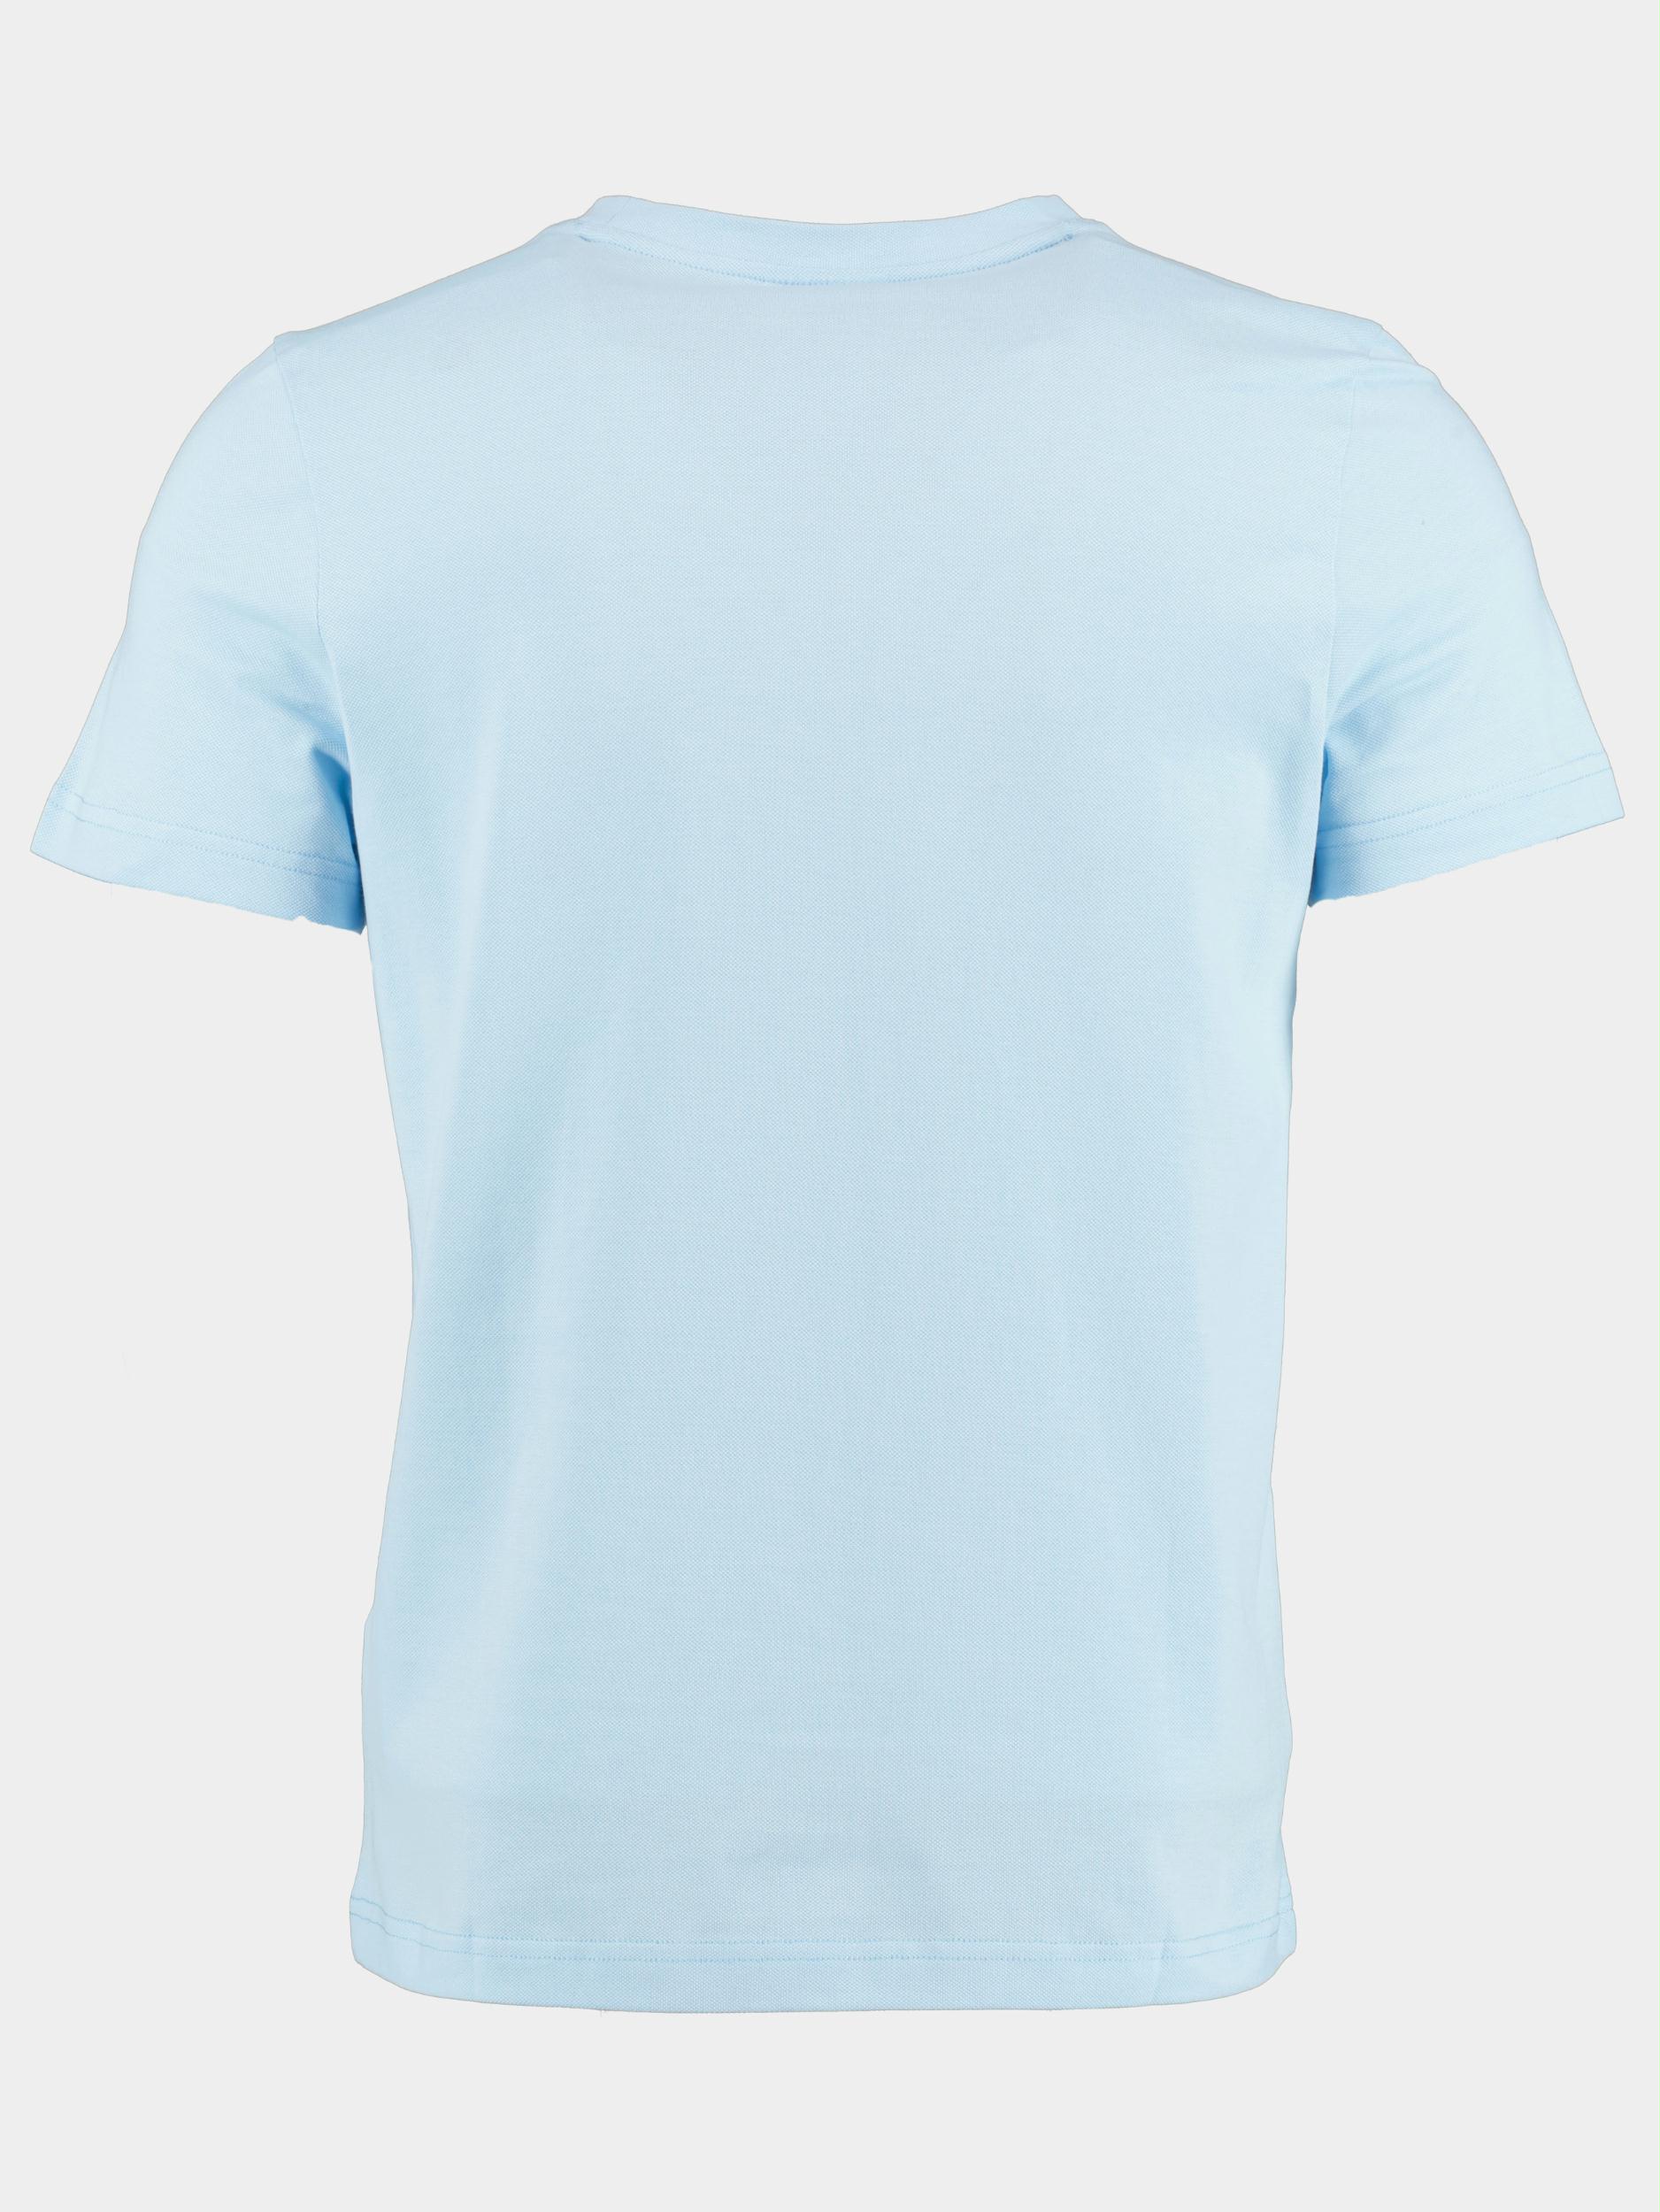 Bos Bright Blue T-shirt korte mouw Blauw Cooper T-shirt Pique 23108CO54BO/210 l.blue